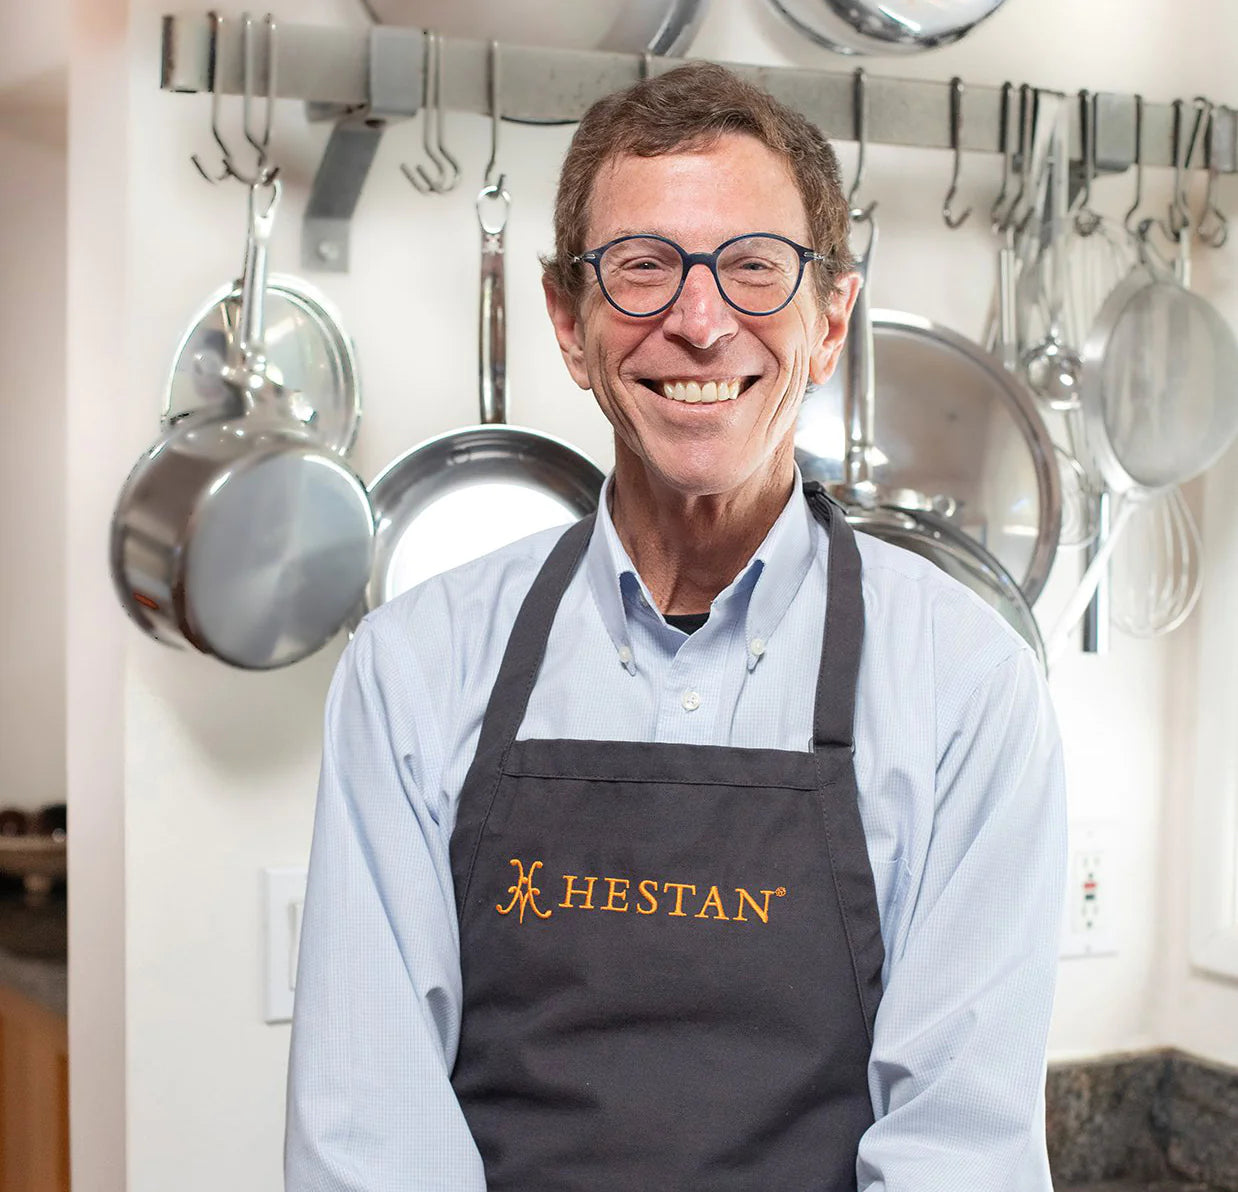 Titanium Saucepans – Hestan Culinary